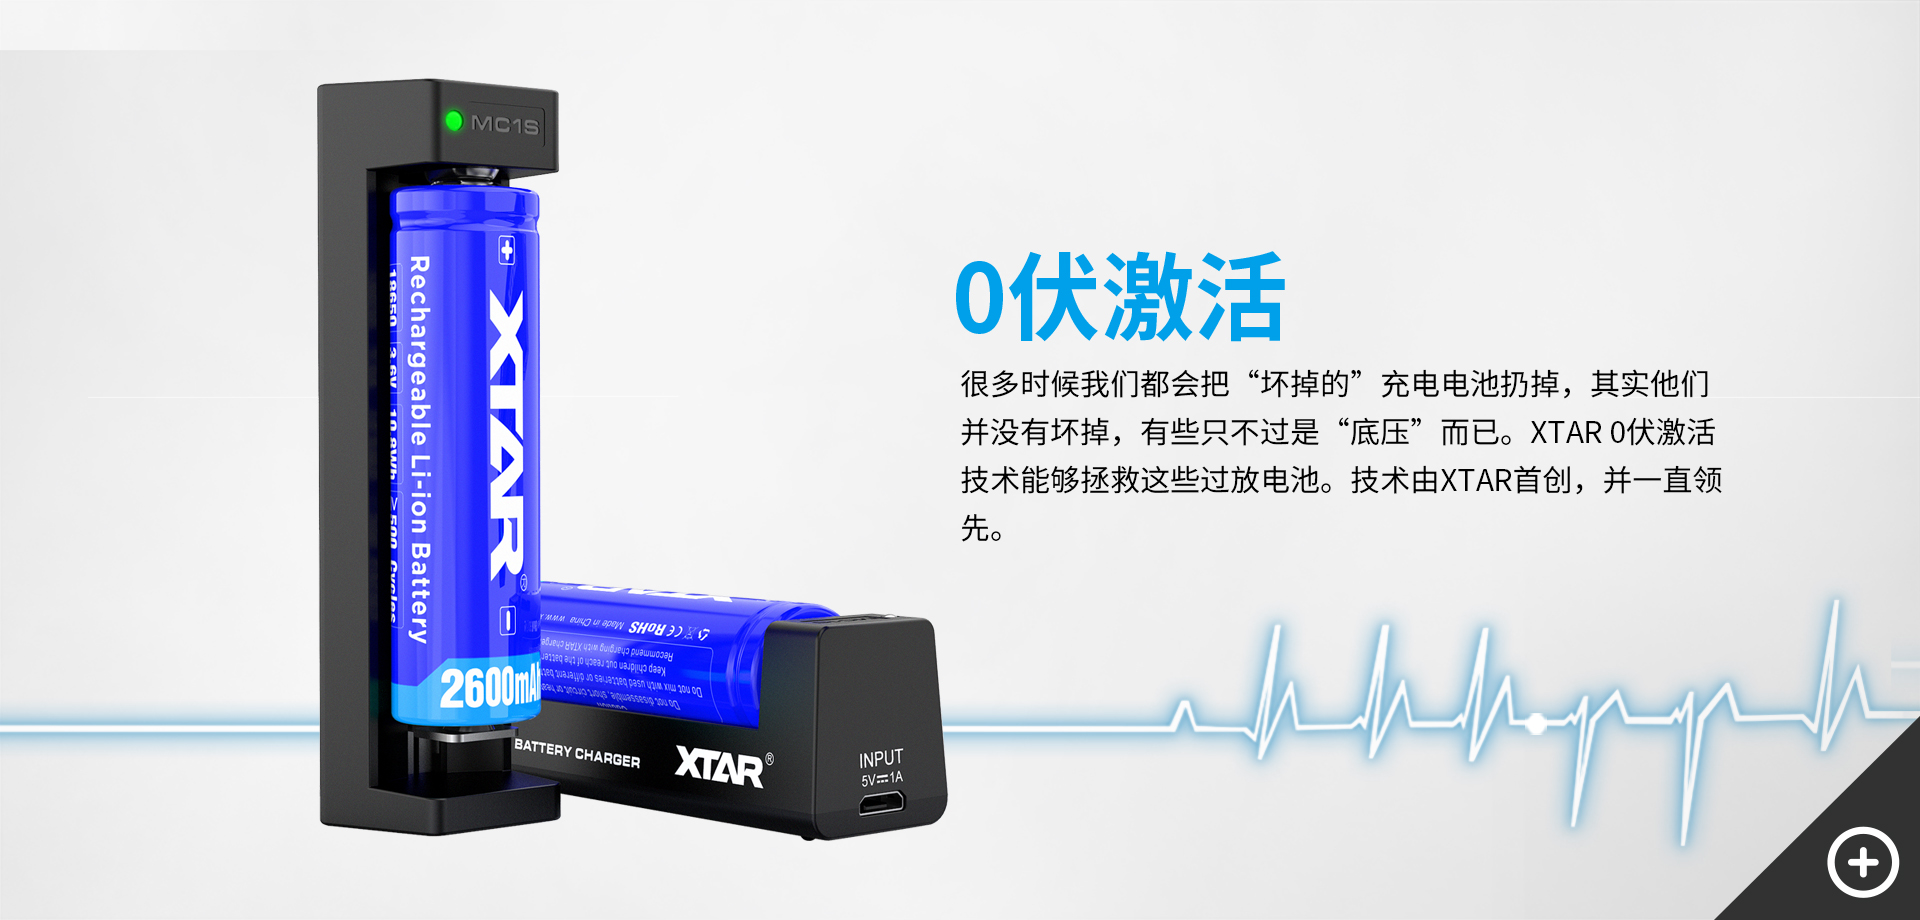 XTAR MC1S智能充电器